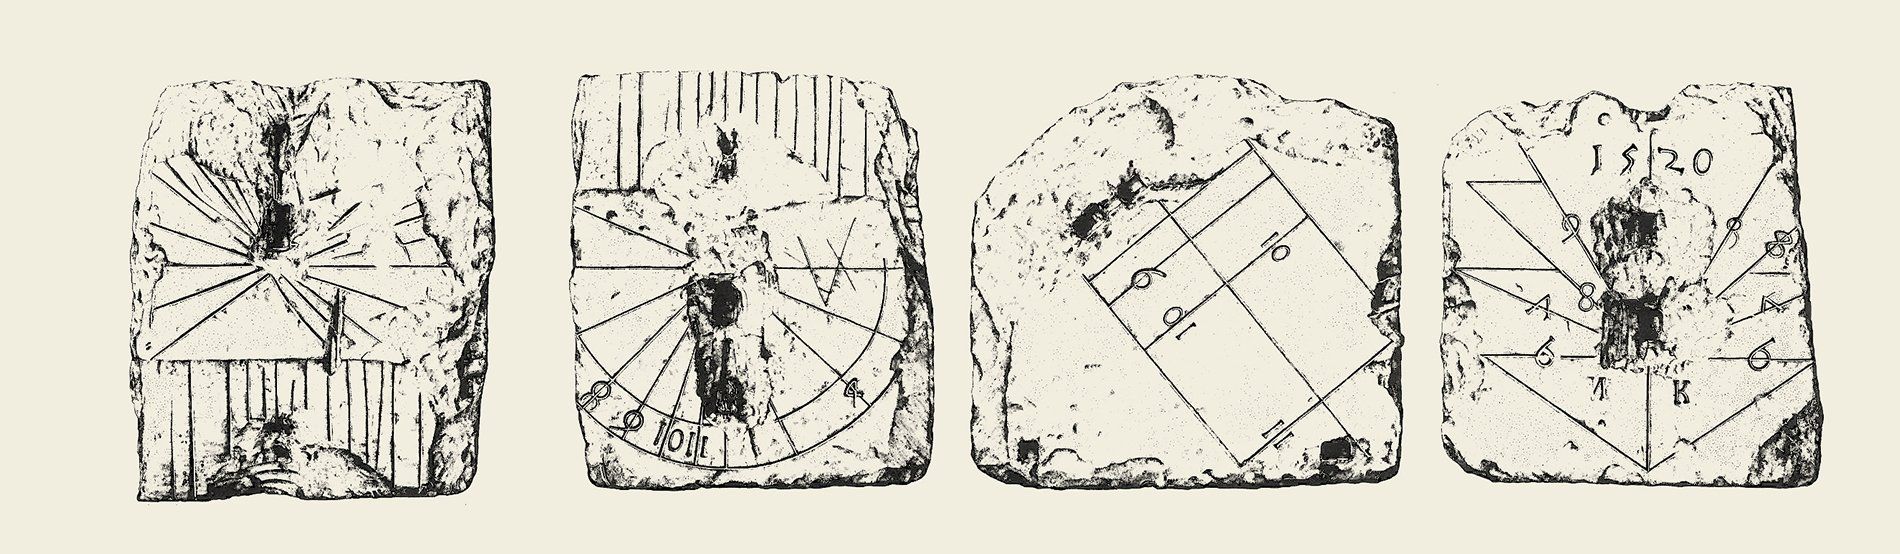 Acton Court's Sundial